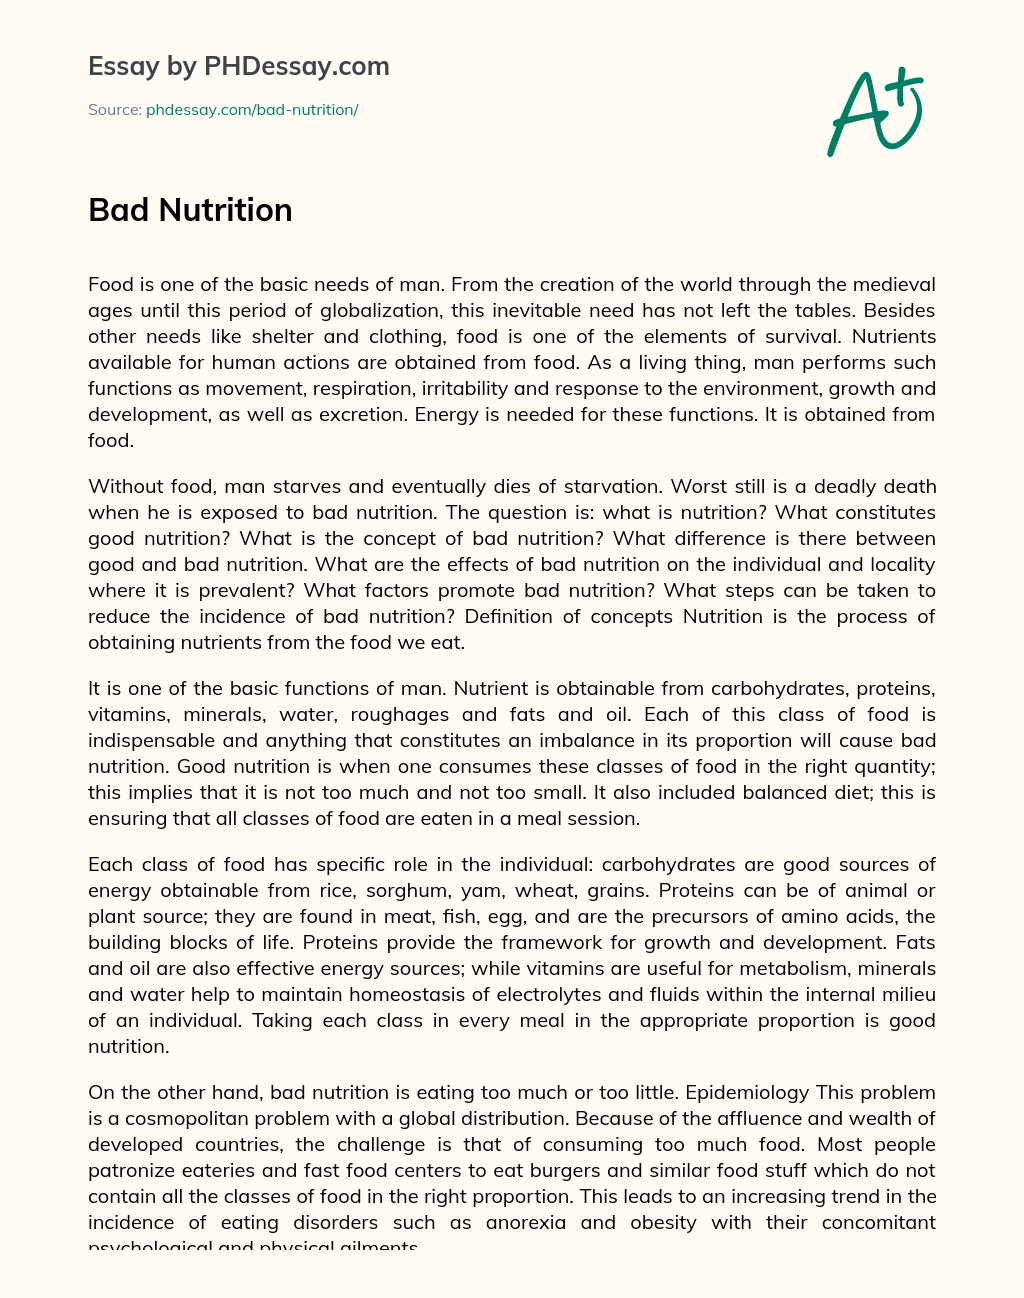 Bad Nutrition essay